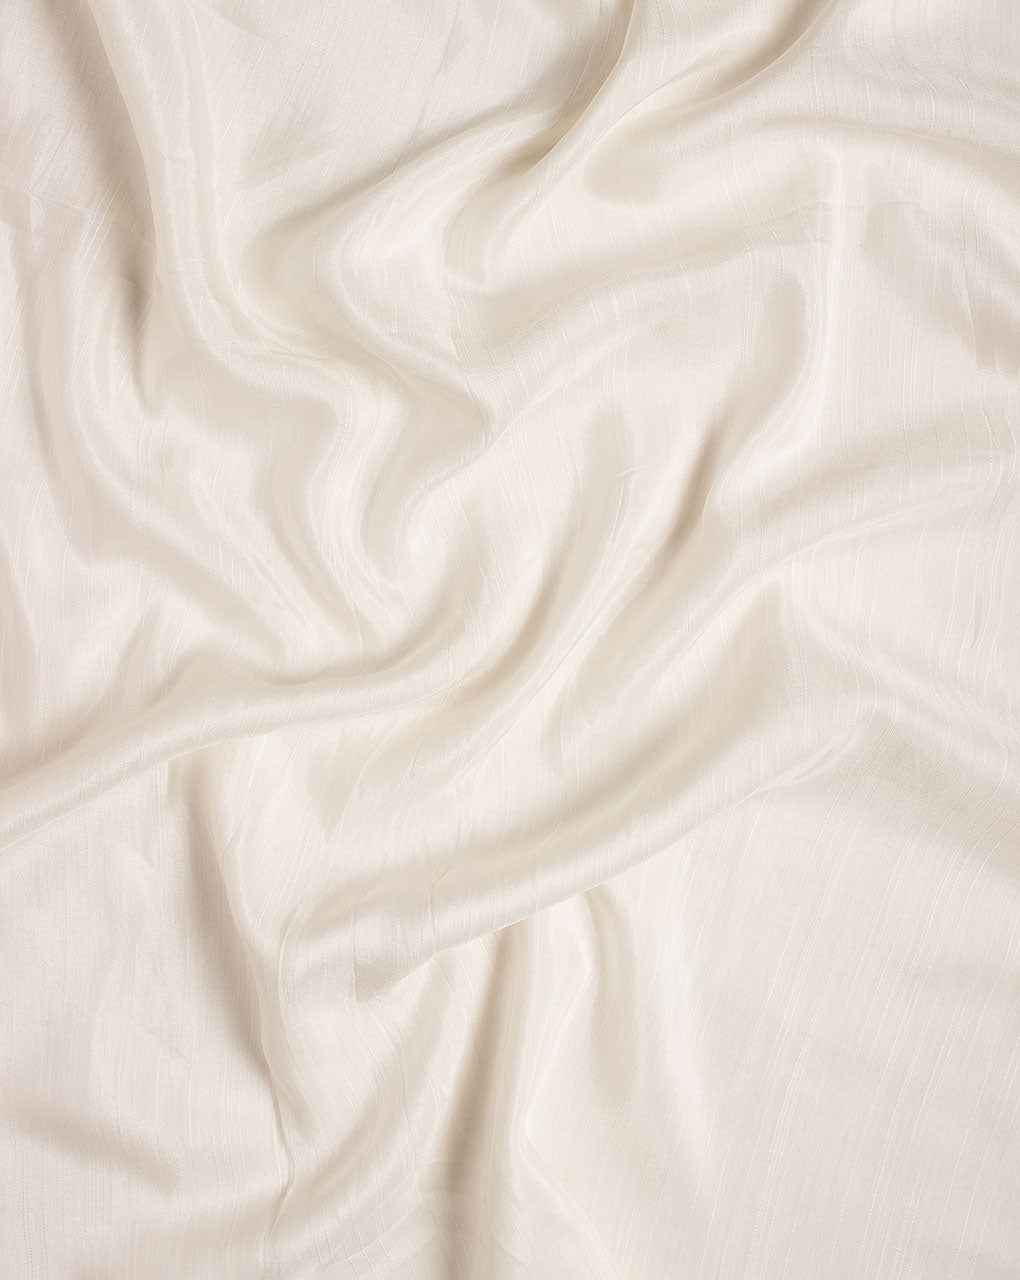 Dyeable Liva Excel Viscose ( Hippo Silk ) Fabric - Fabriclore.com